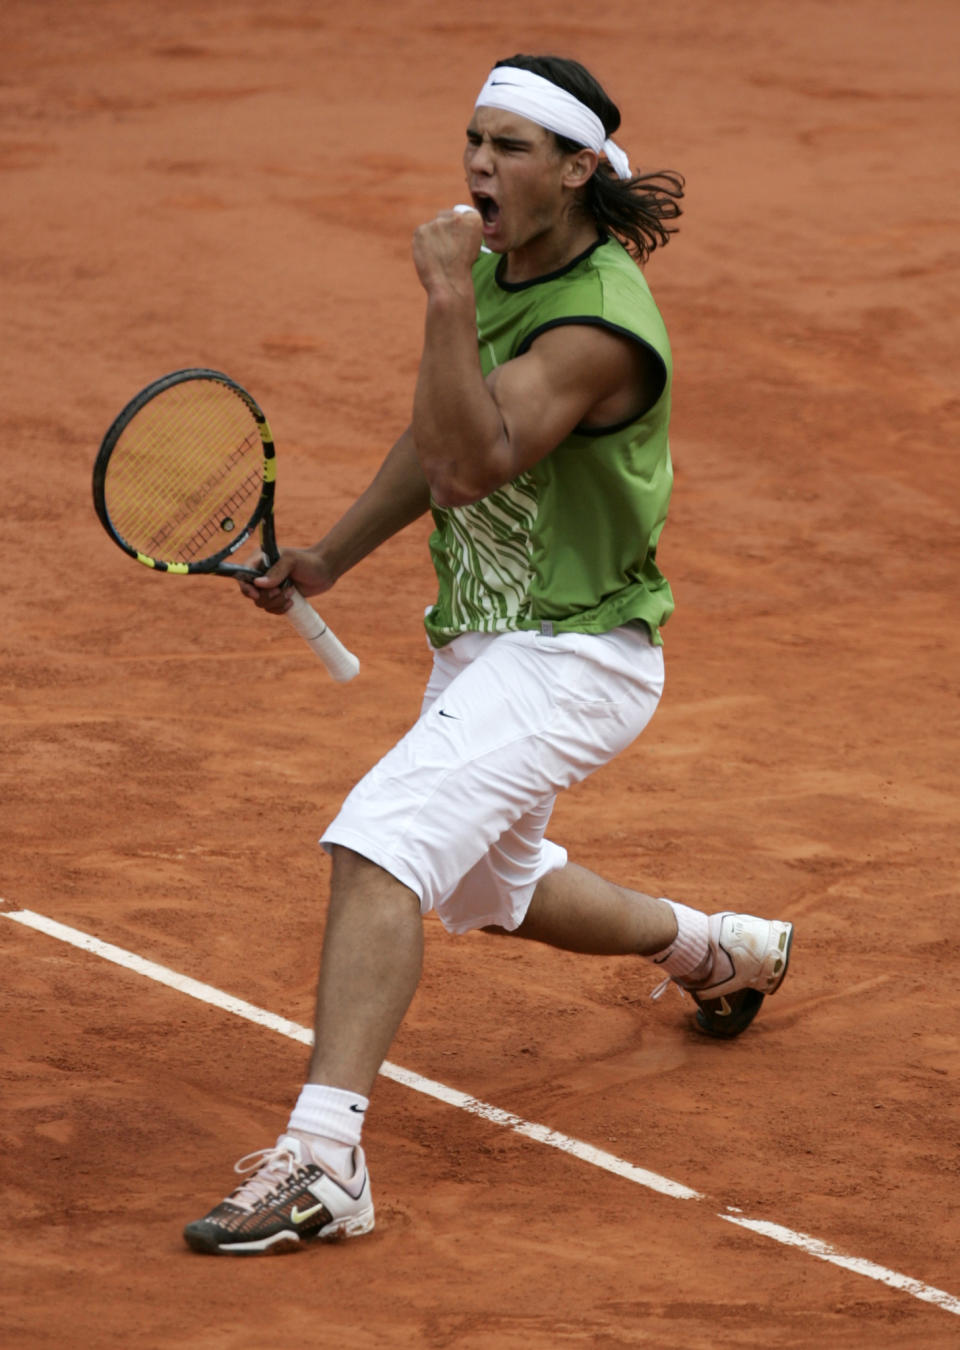 Rafael Nadal at the French Open in 2005. - Credit: FRANCOIS MORI/AP